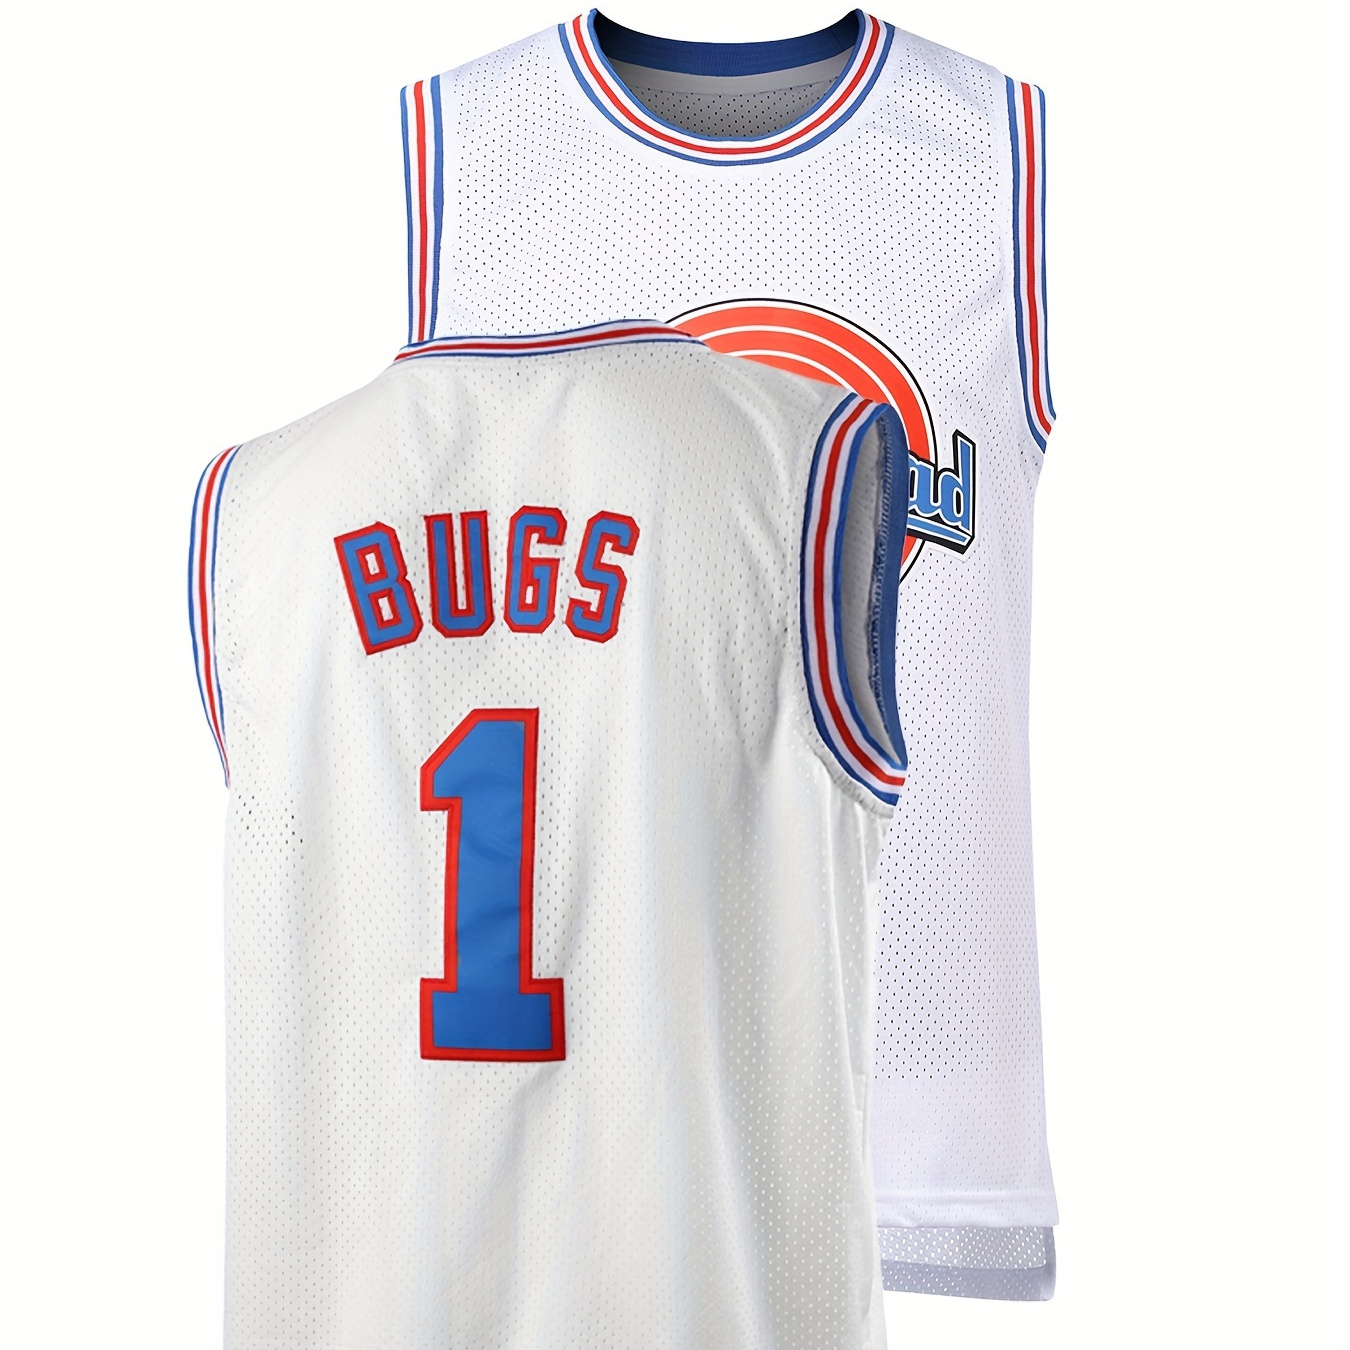 

Jerseys Tops Basketball # 1 Bugs Classic Vintage Sweatwicking Breathable Sleeveless White Basketball Sweatshirt